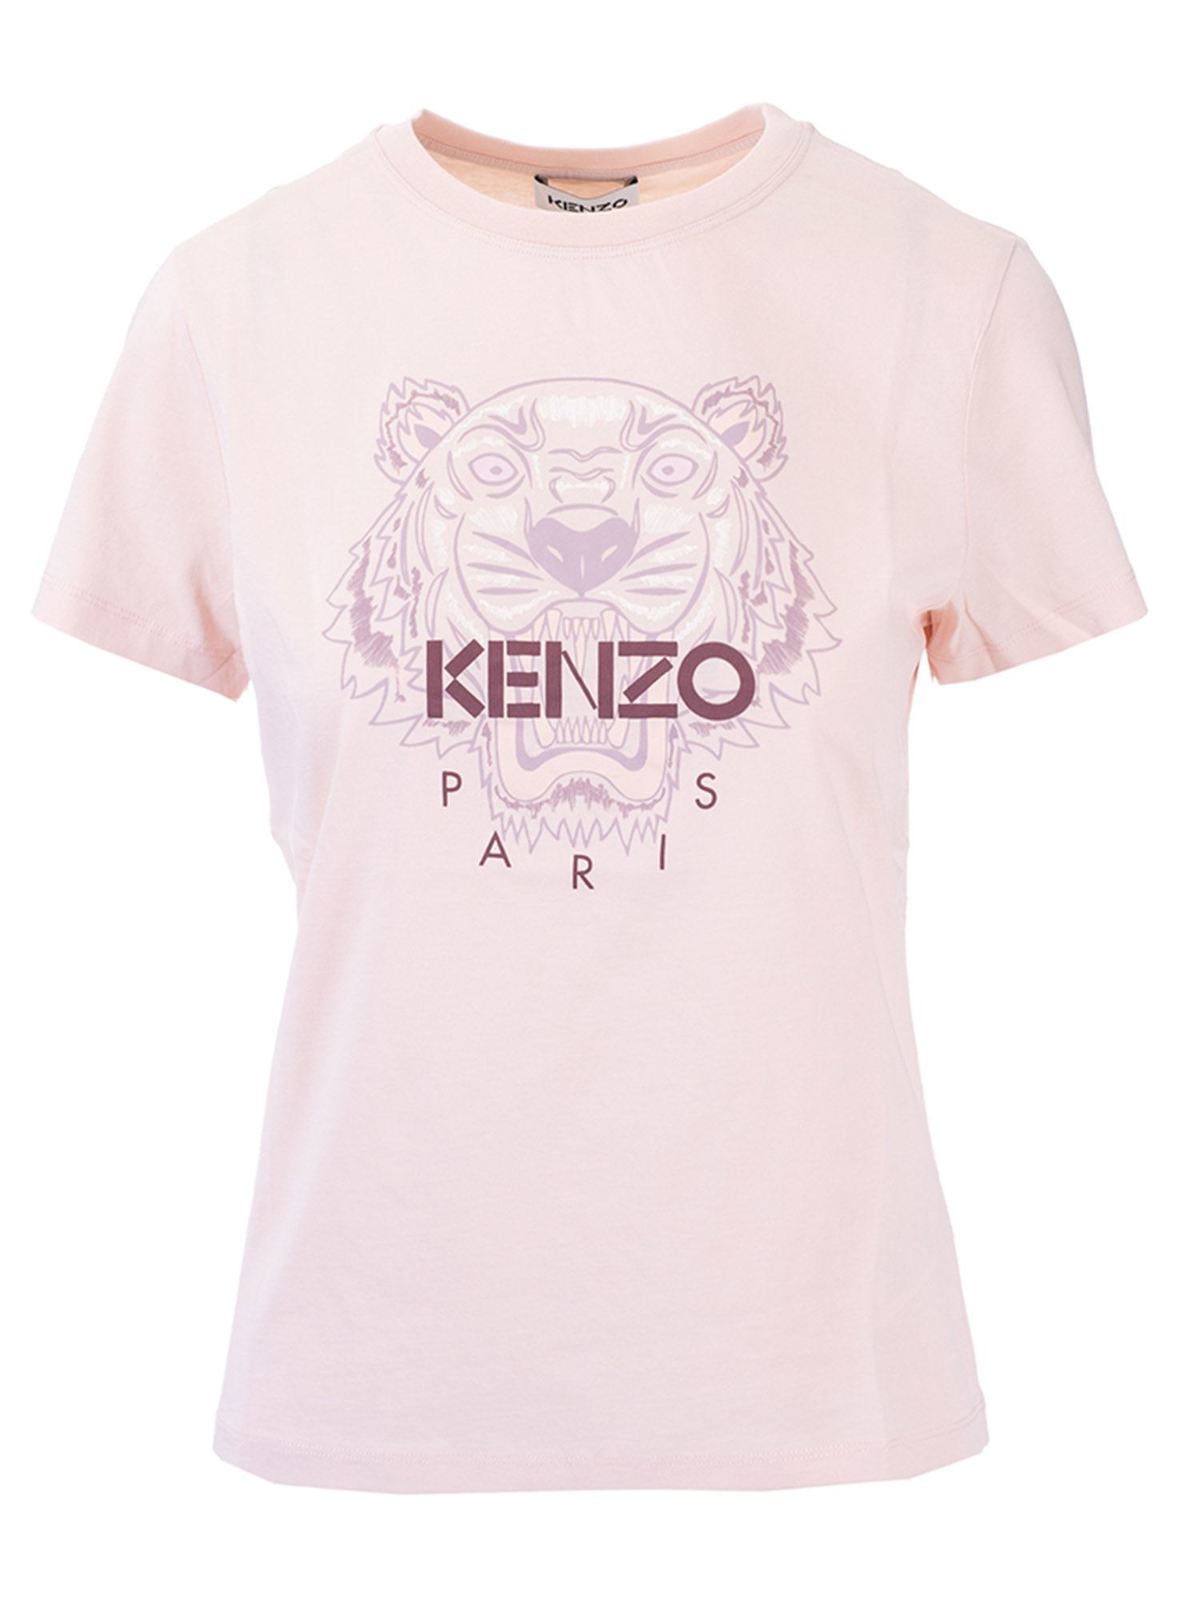 kenzo top pink